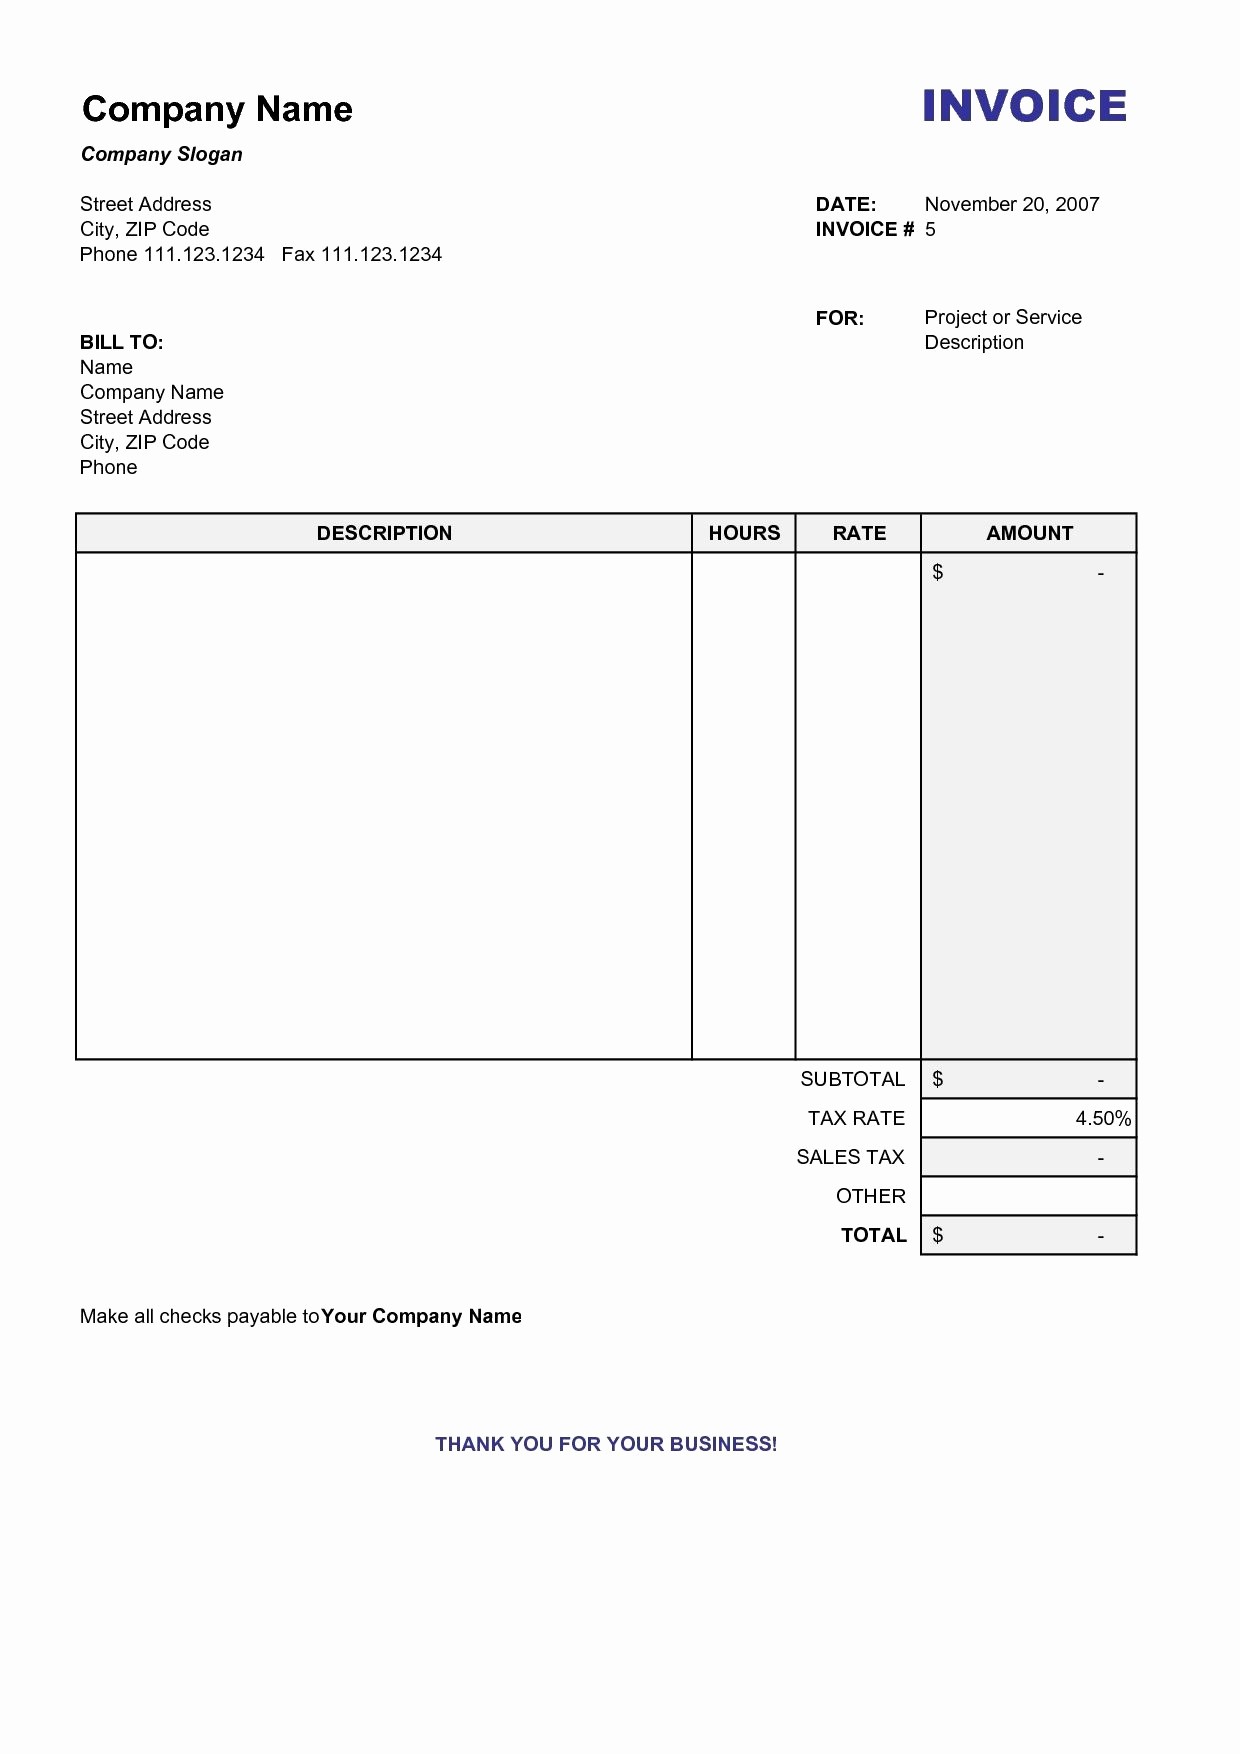 Copy Of An Invoice Template Unique Copy Of A Blank Invoice Invoice Template Free 2016 Copy Of